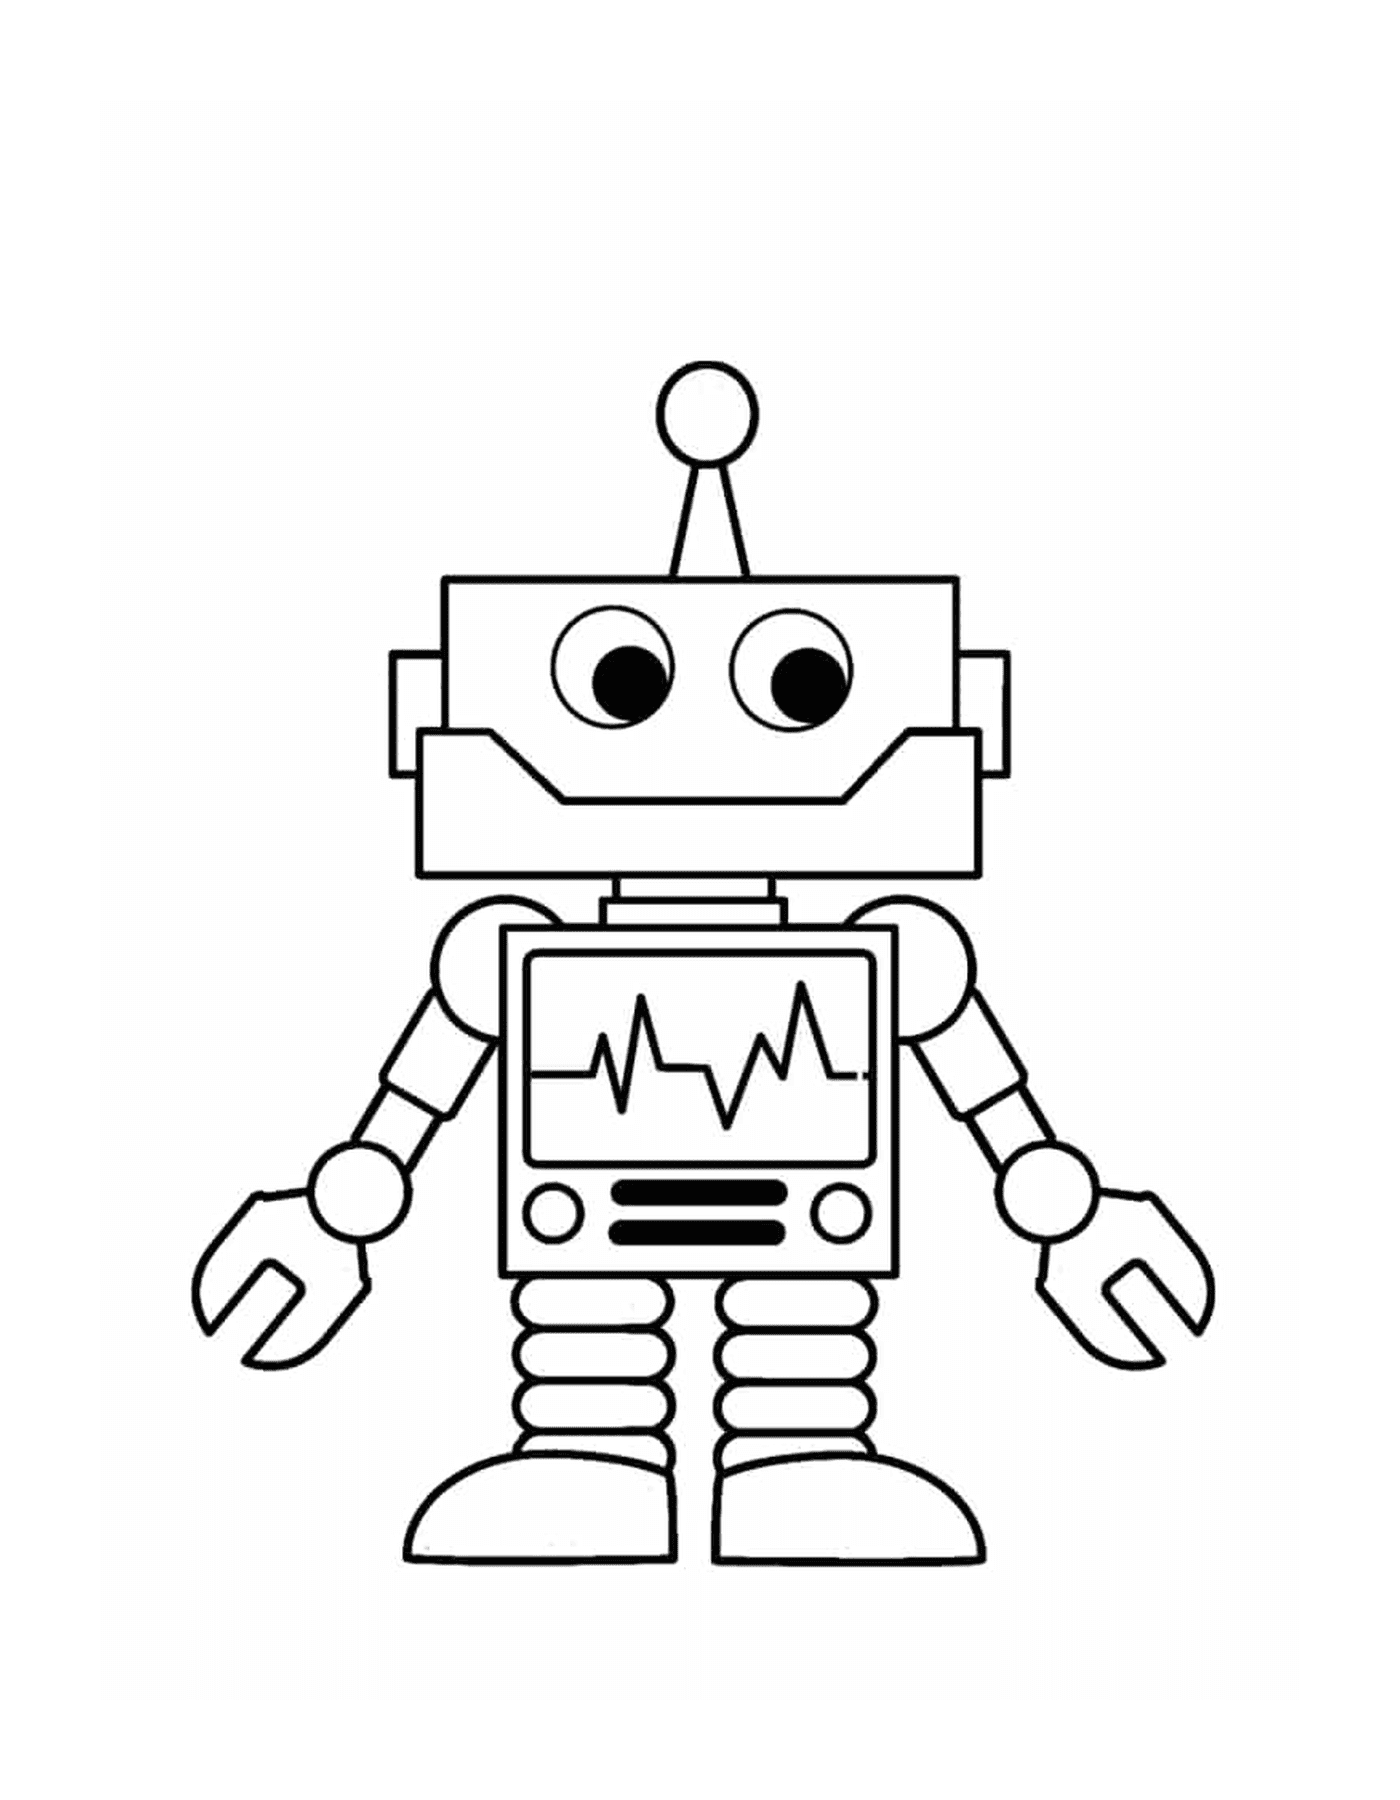  Simple child robot 